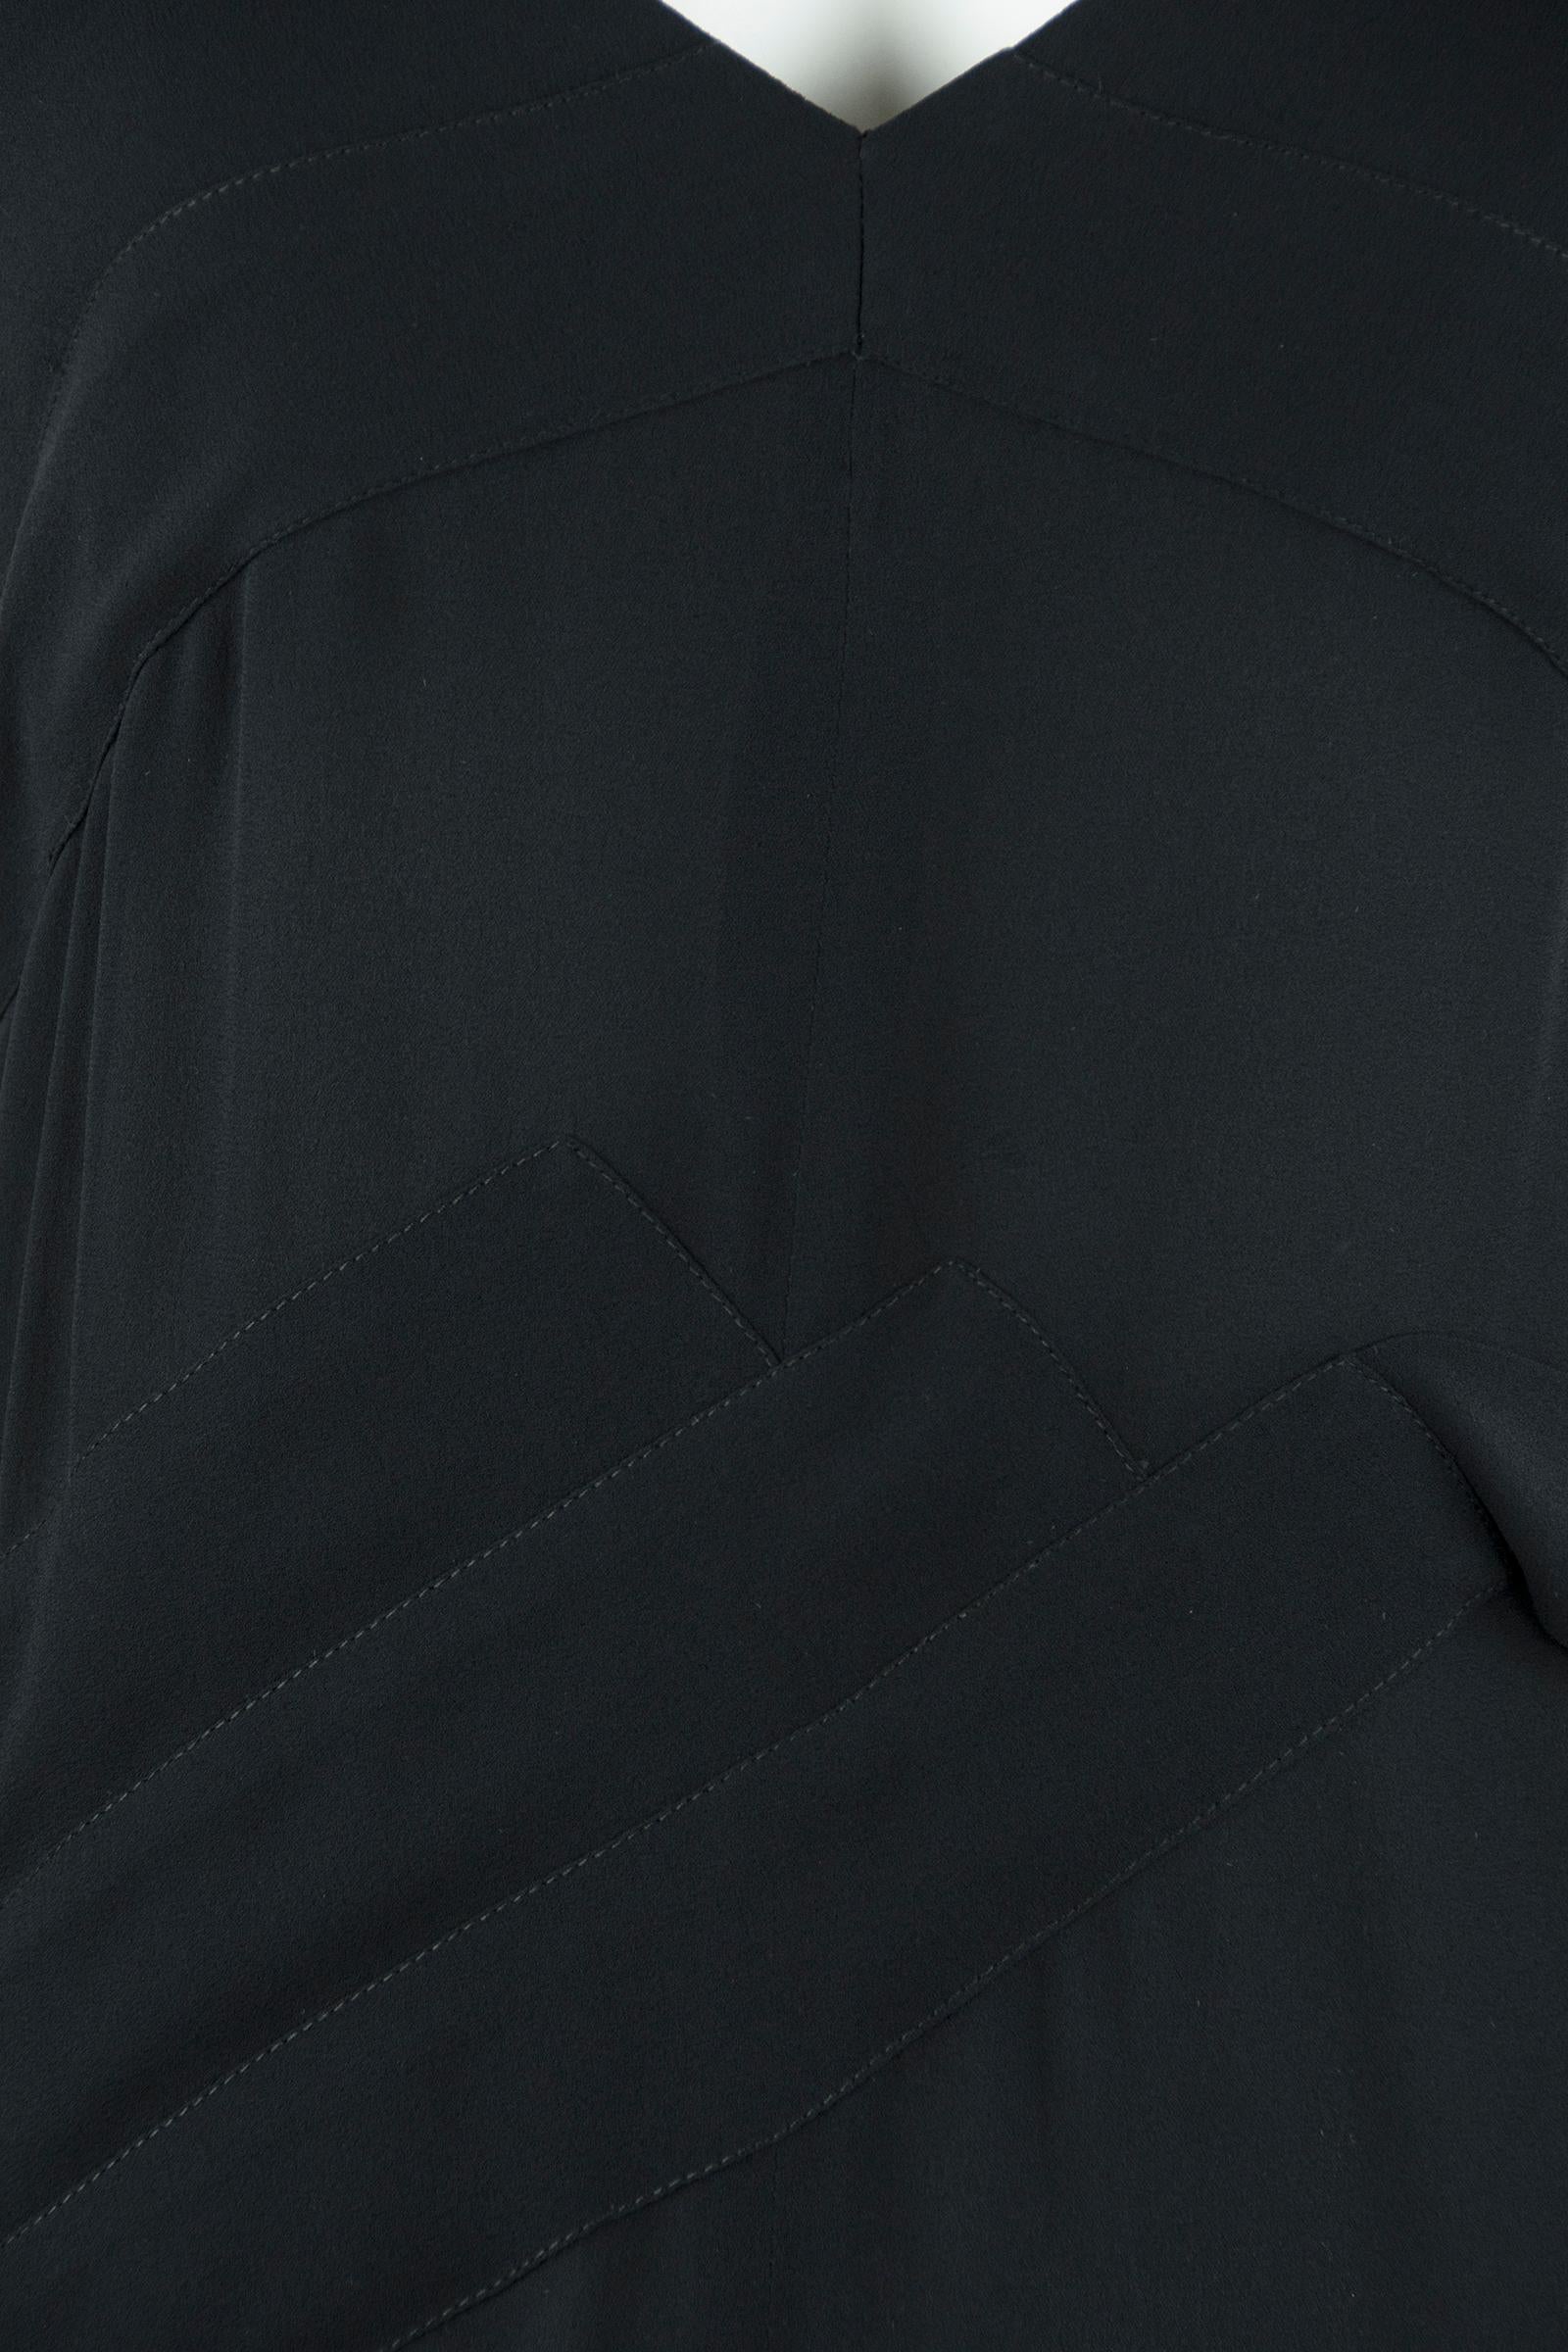 Chanel Black Sleeveless Silk Jumpsuit - Size FR 36/38 For Sale 1